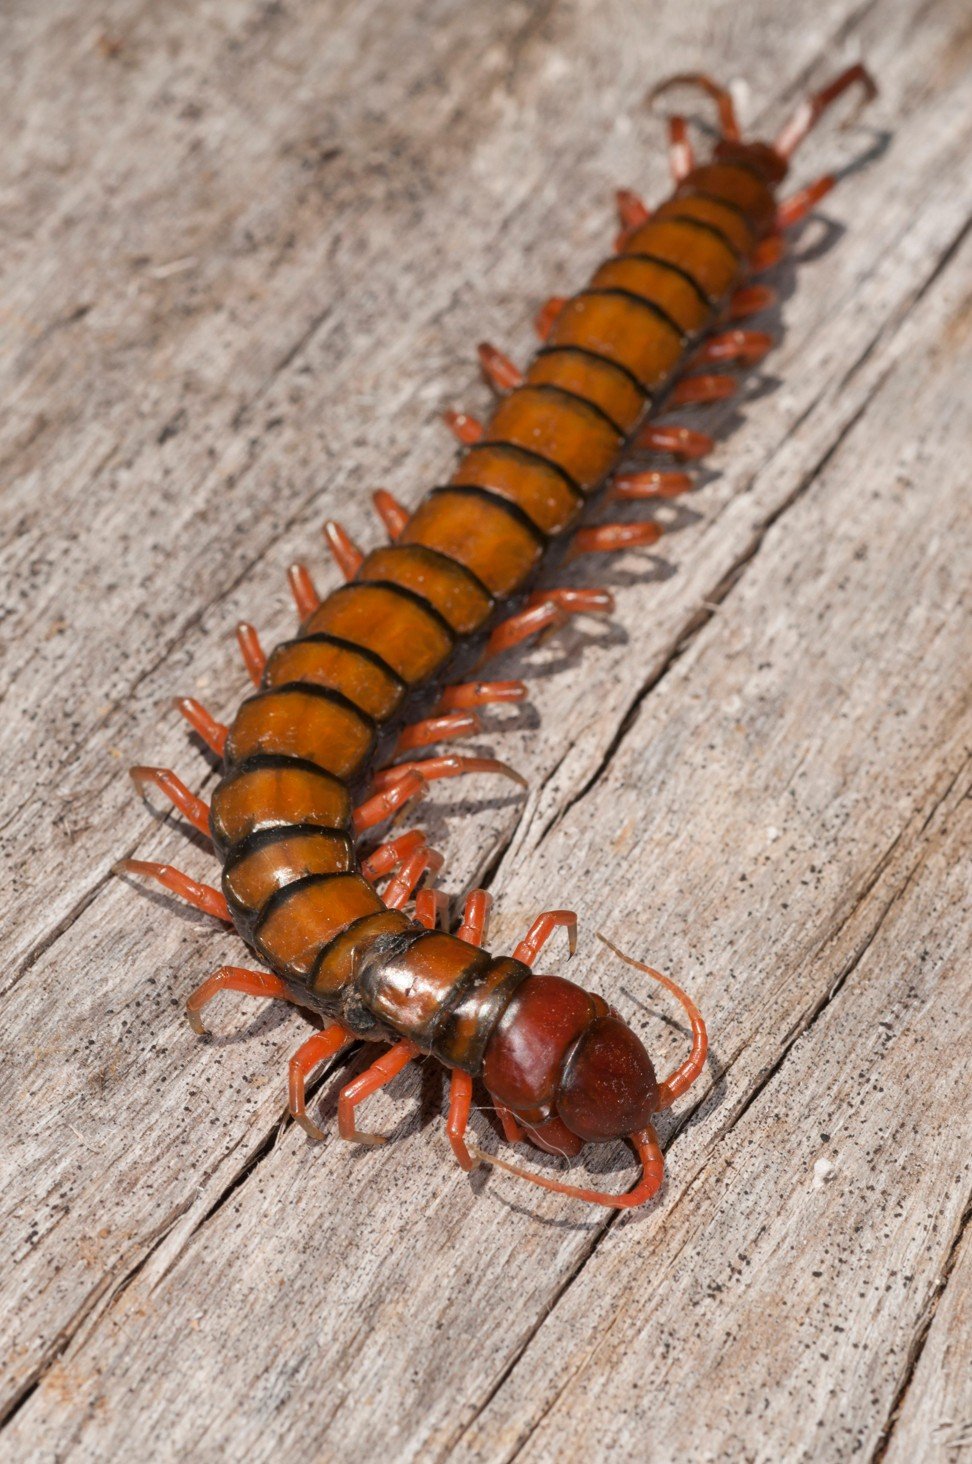 The giant centipede. Photo: Alamy